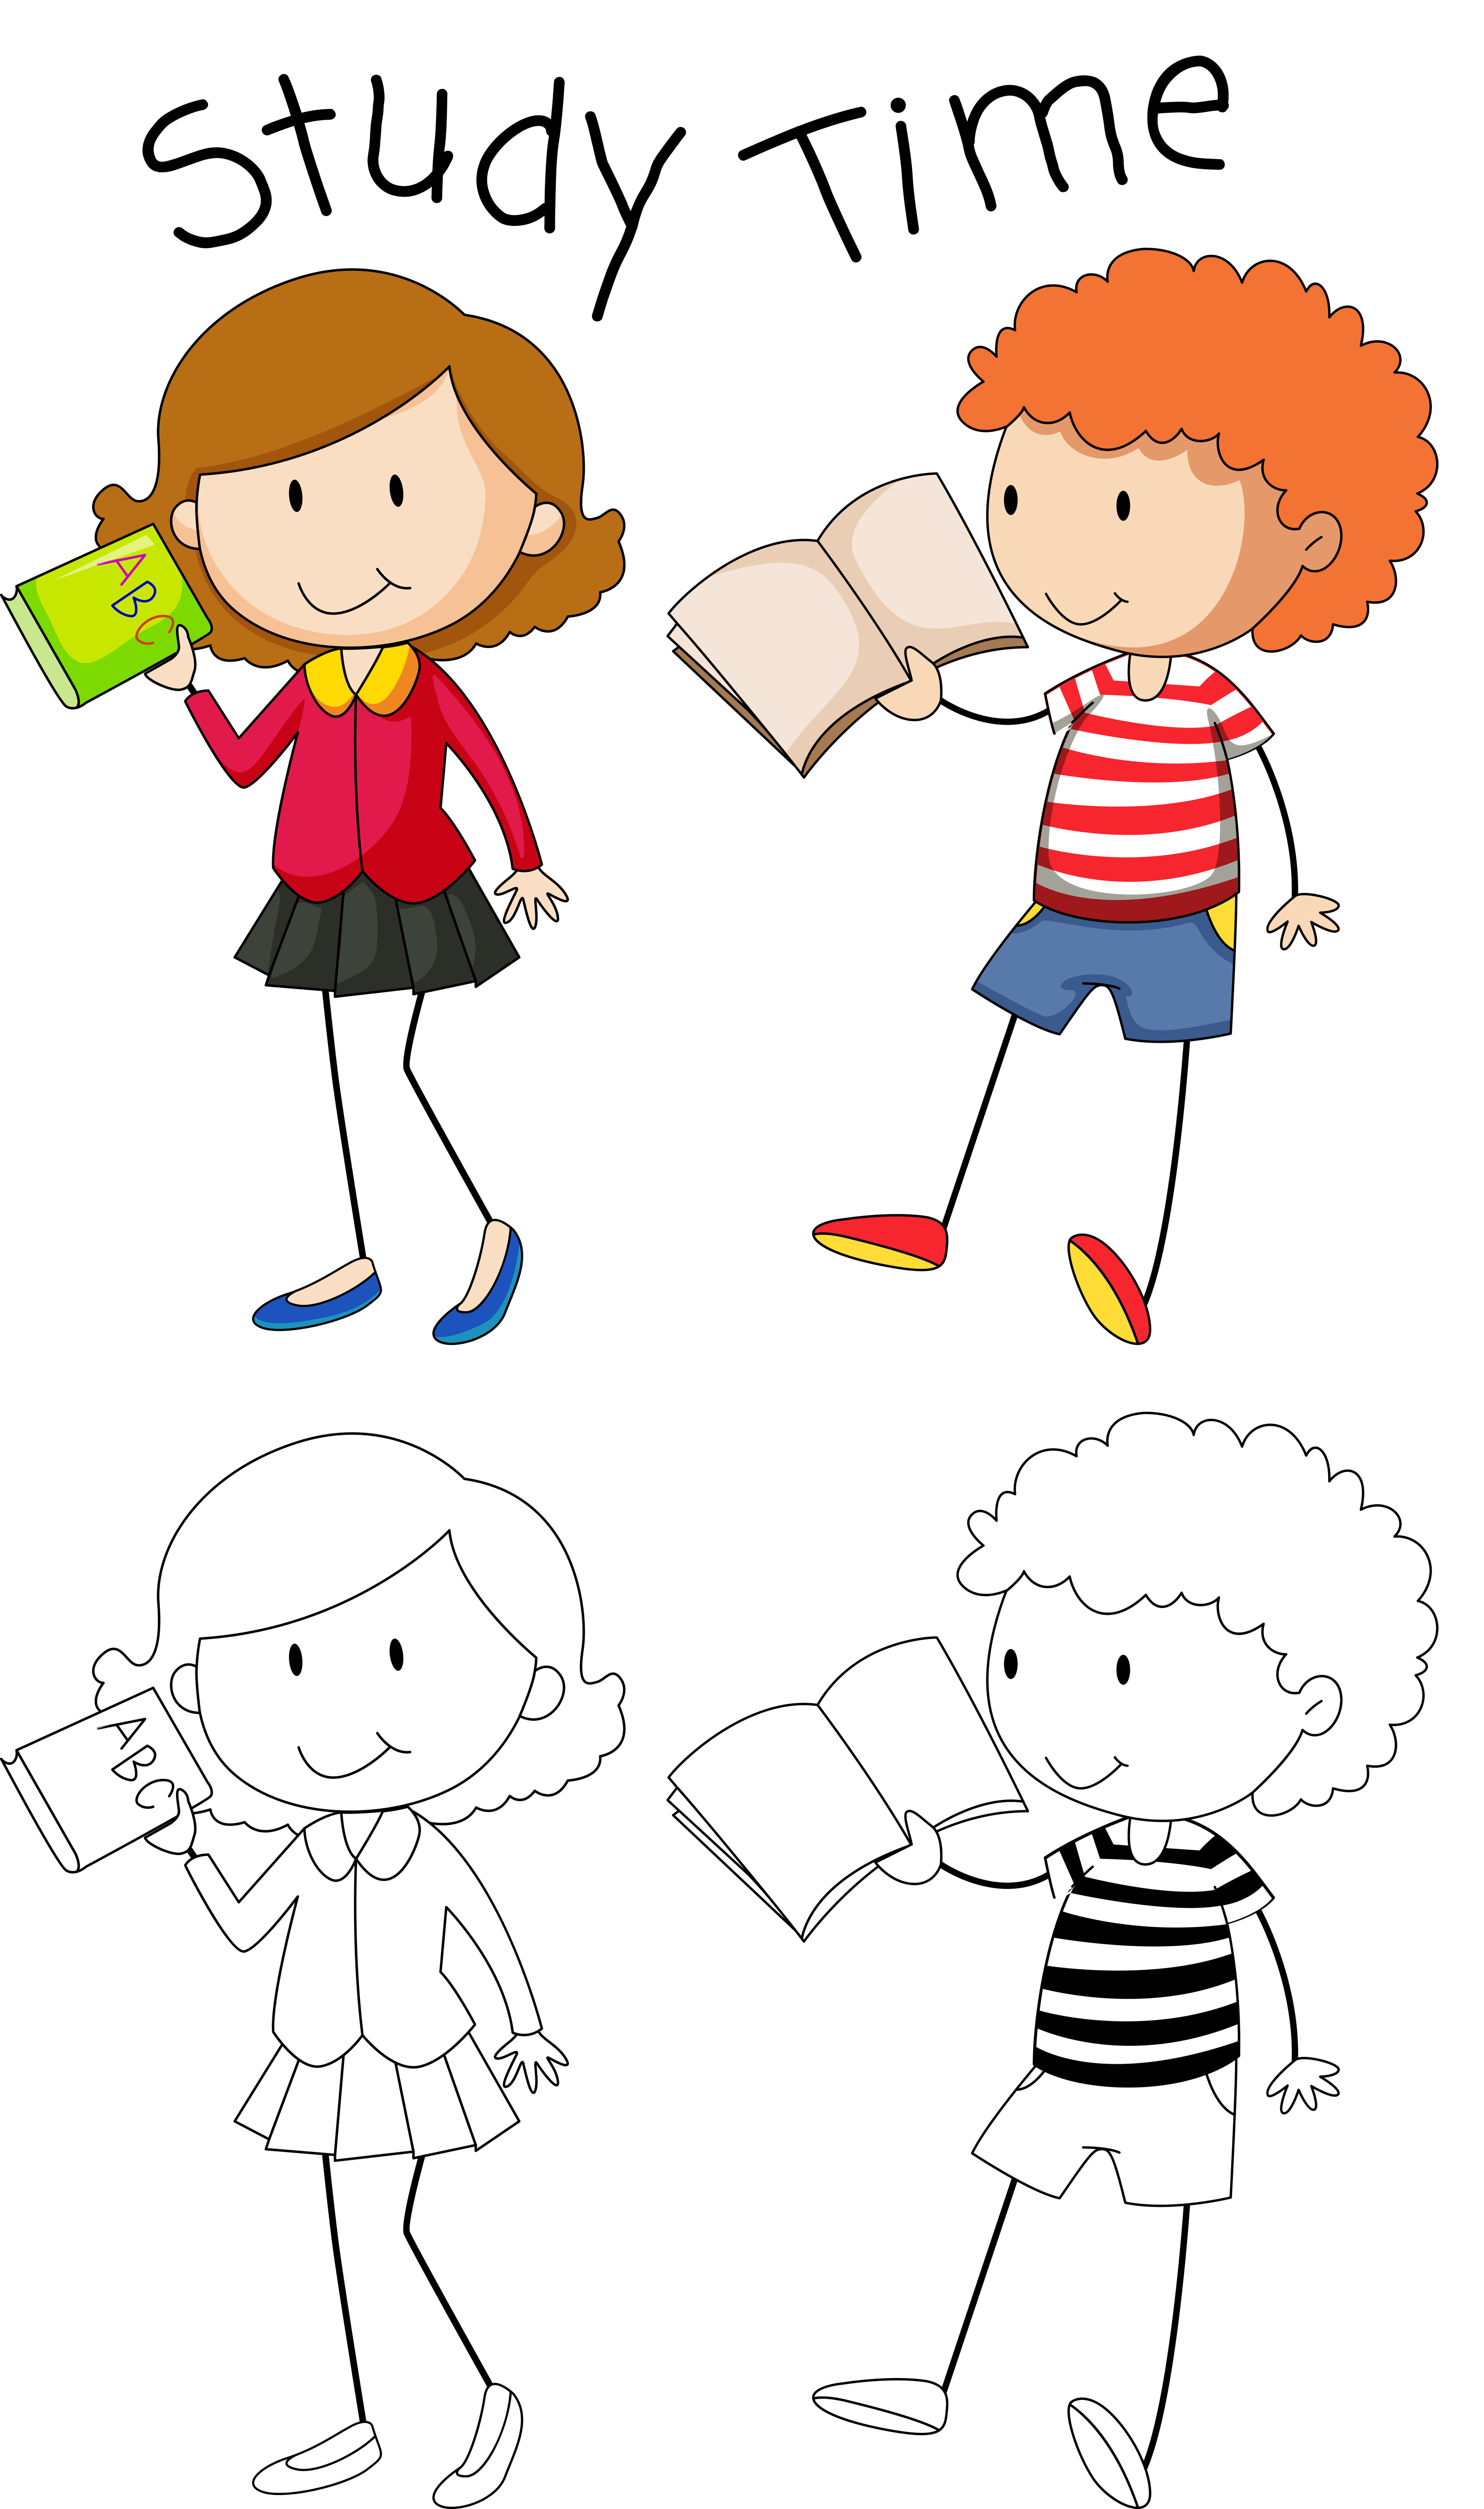  Doodle  girl  character study 550100 Download Free Vectors 